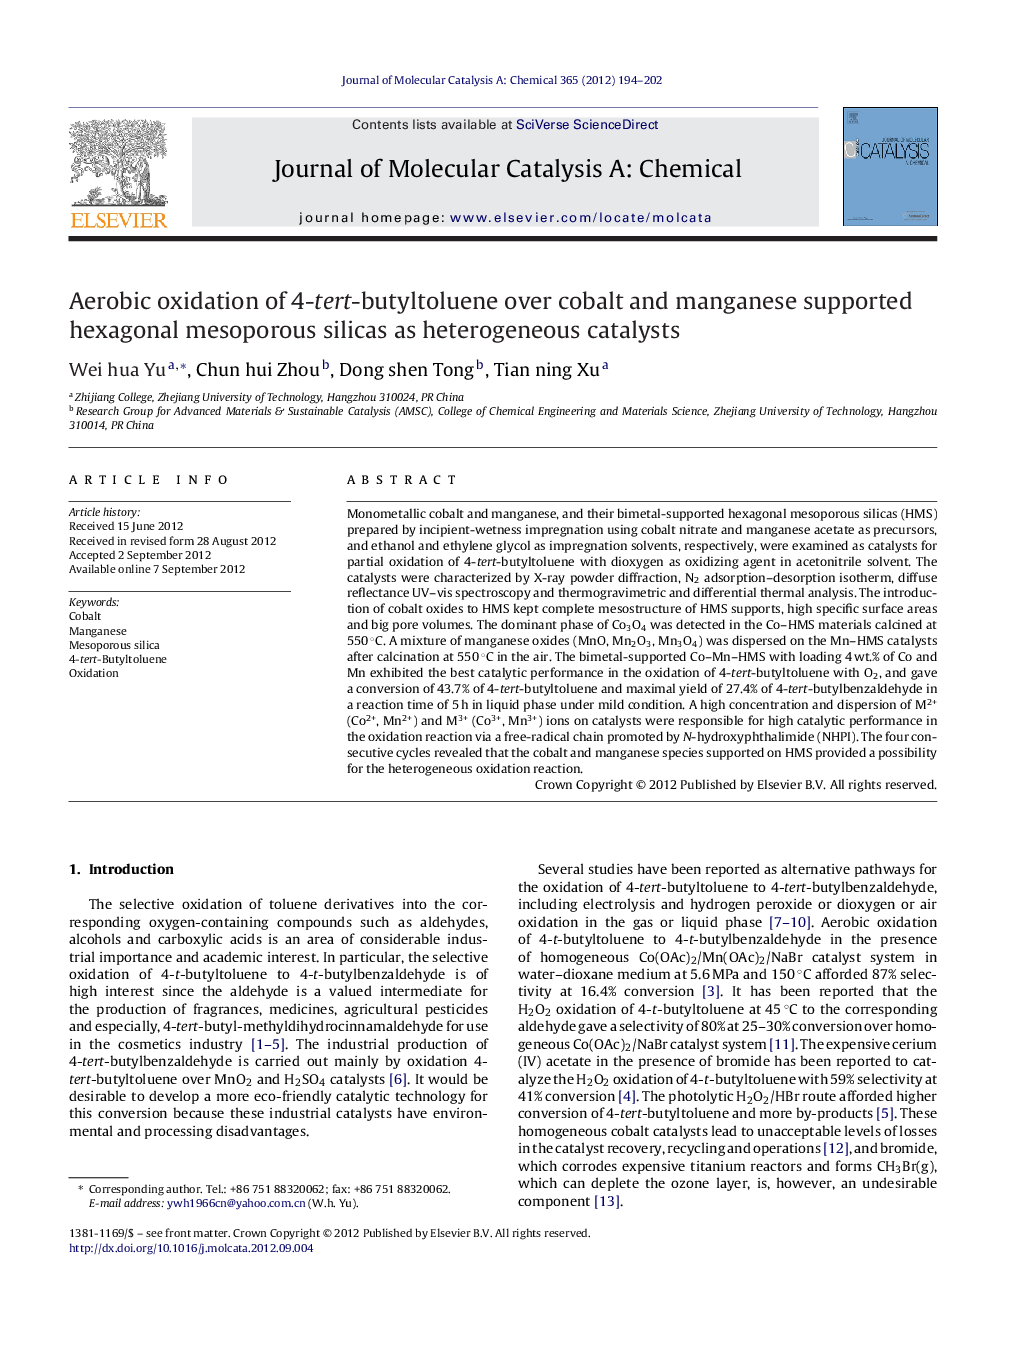 Aerobic oxidation of 4-tert-butyltoluene over cobalt and manganese supported hexagonal mesoporous silicas as heterogeneous catalysts